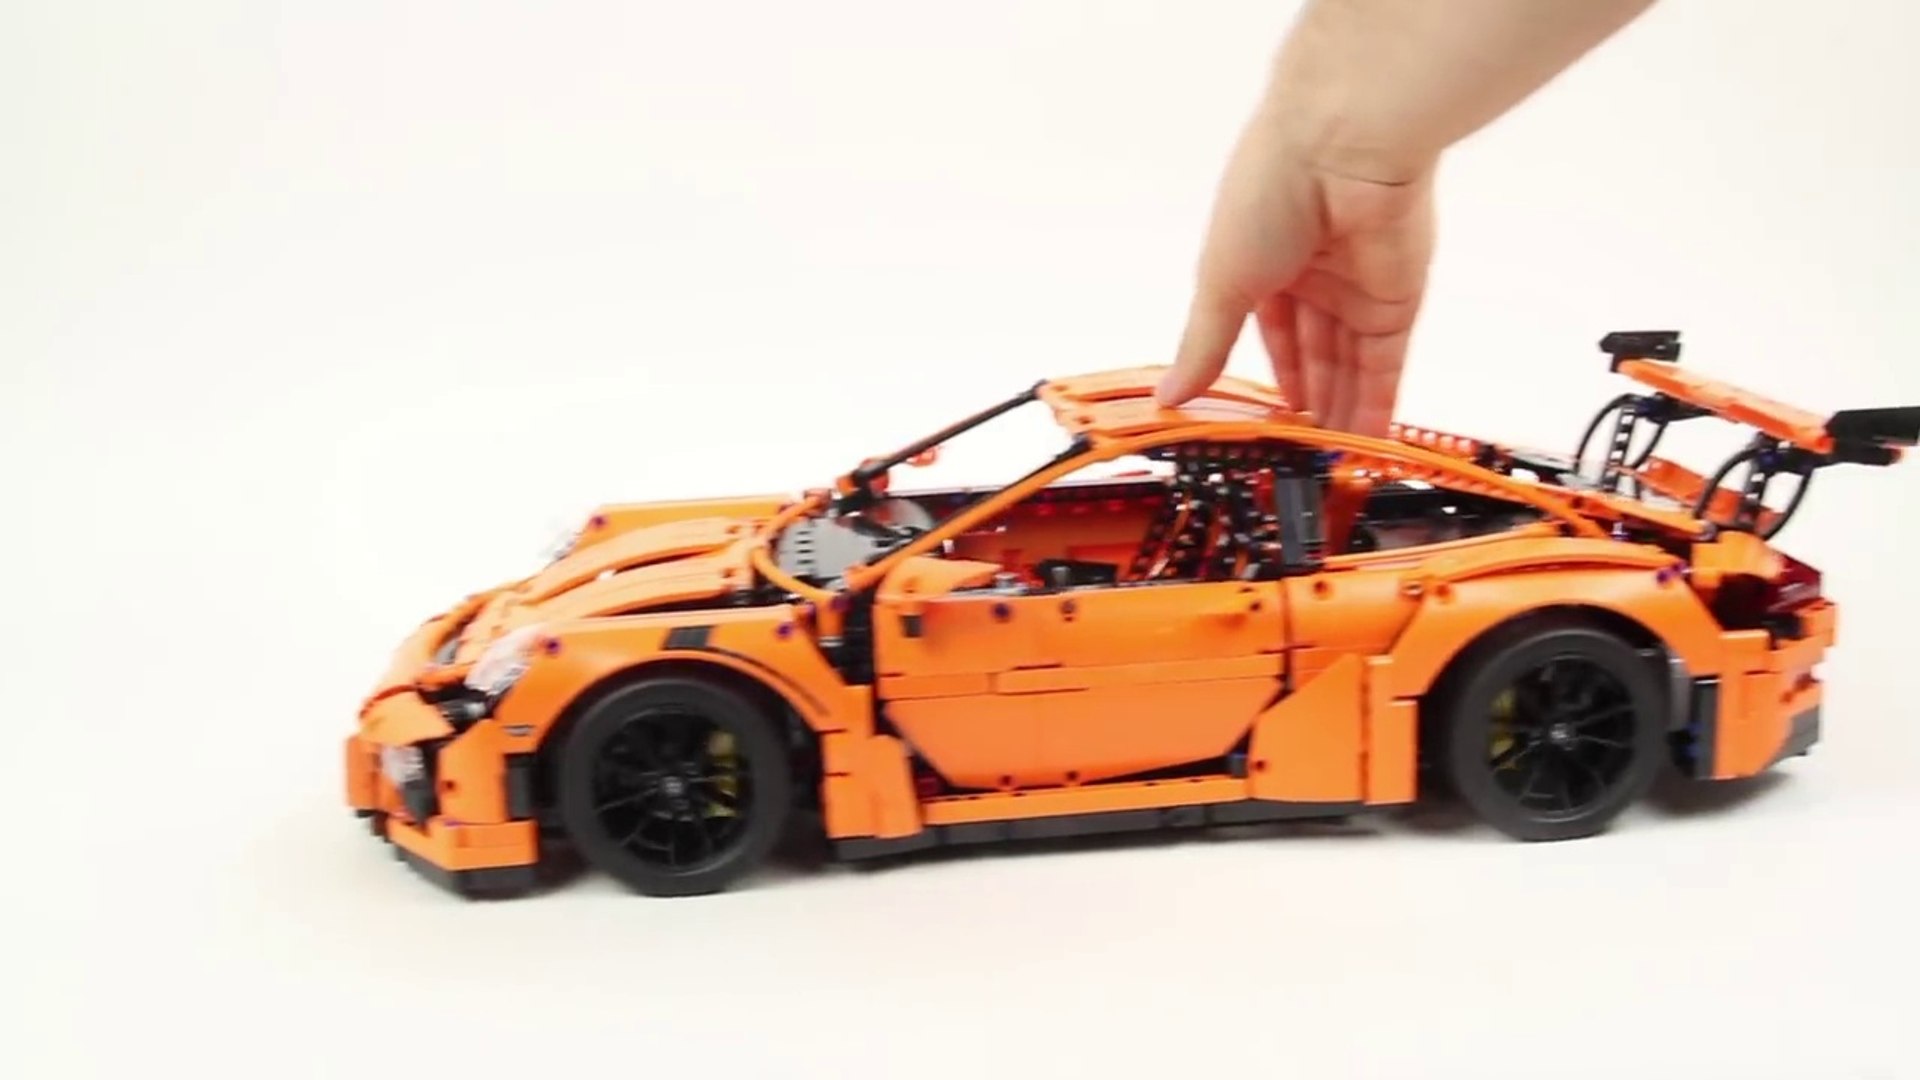 Lego Technic 42056 Porsche 911 Gt3 Rs Lego Speed Build